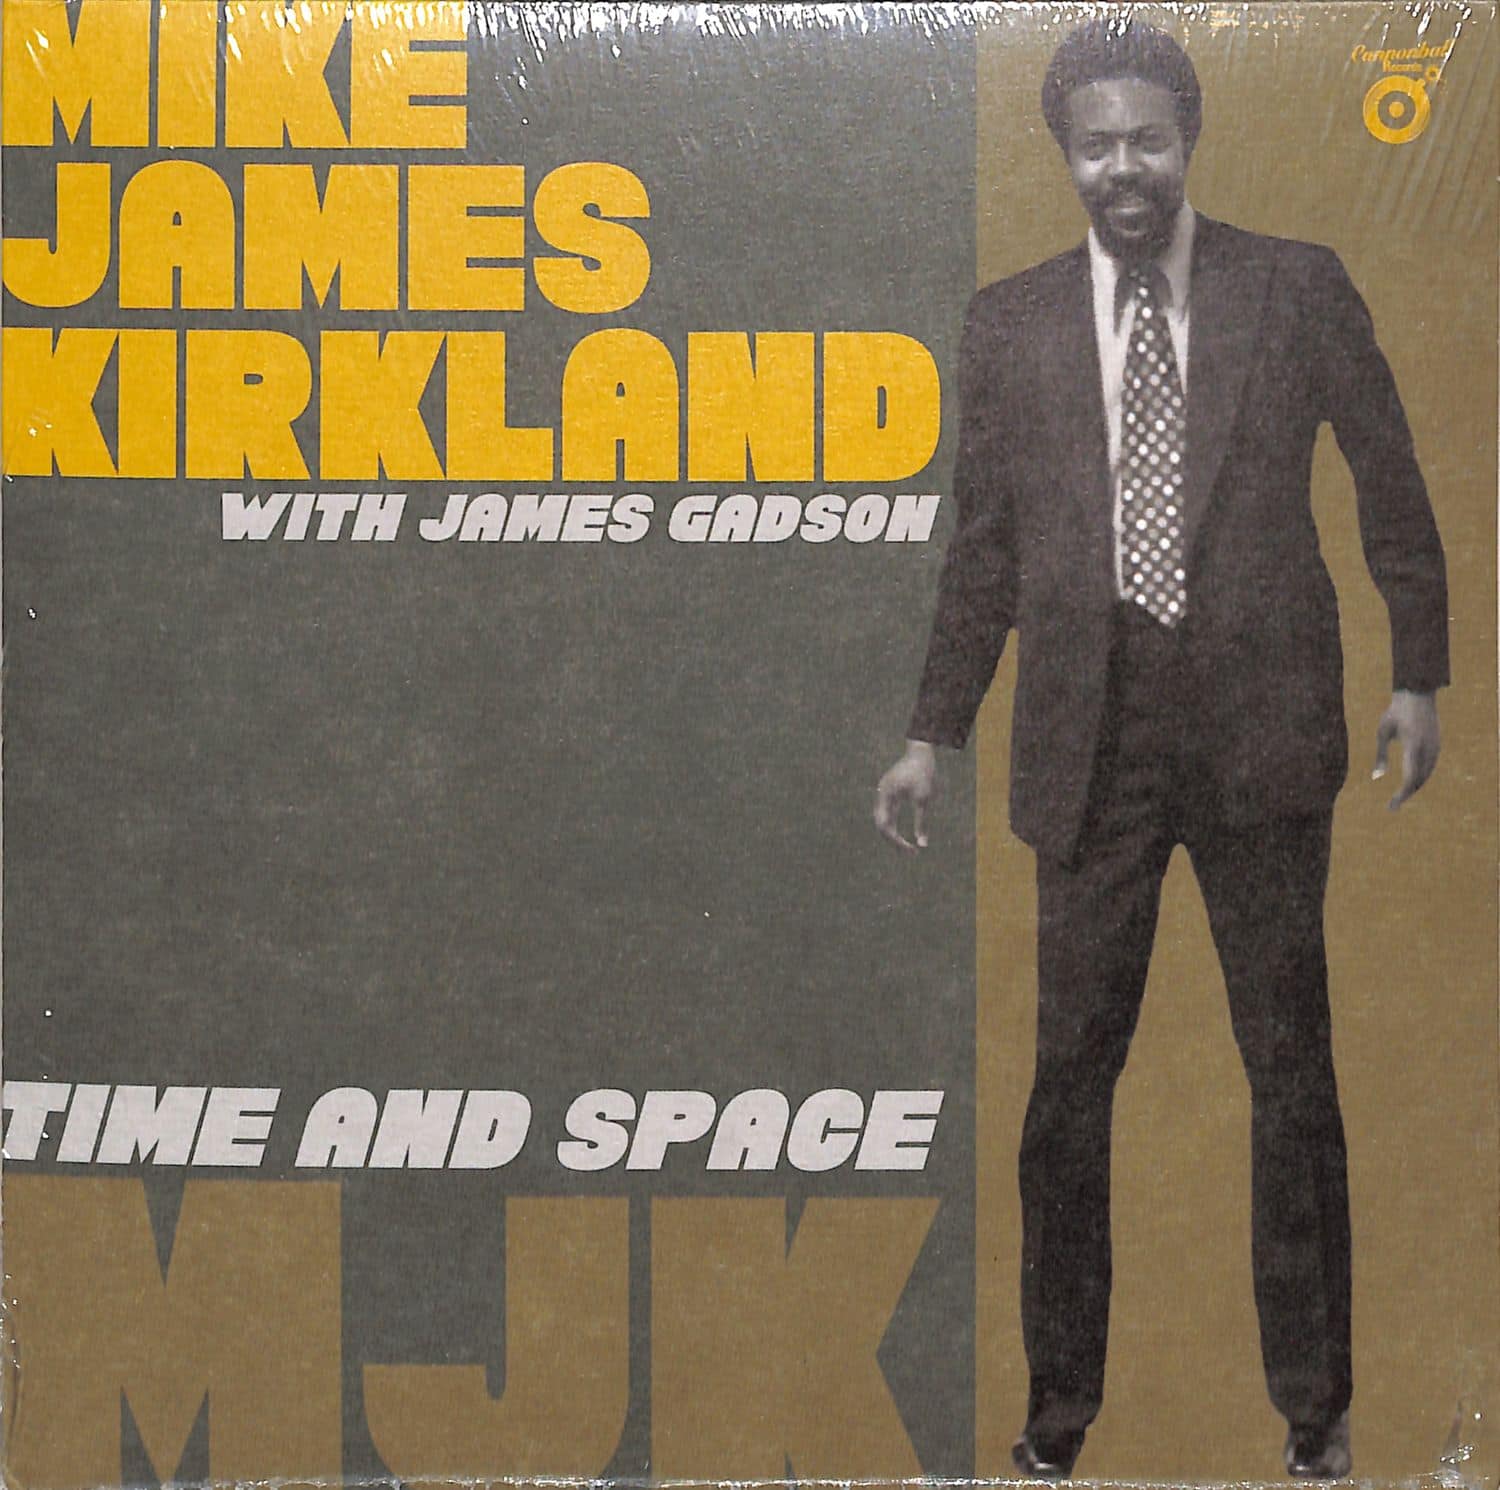 Mike James Kirkland & James Gadson - TIME & SPACE 